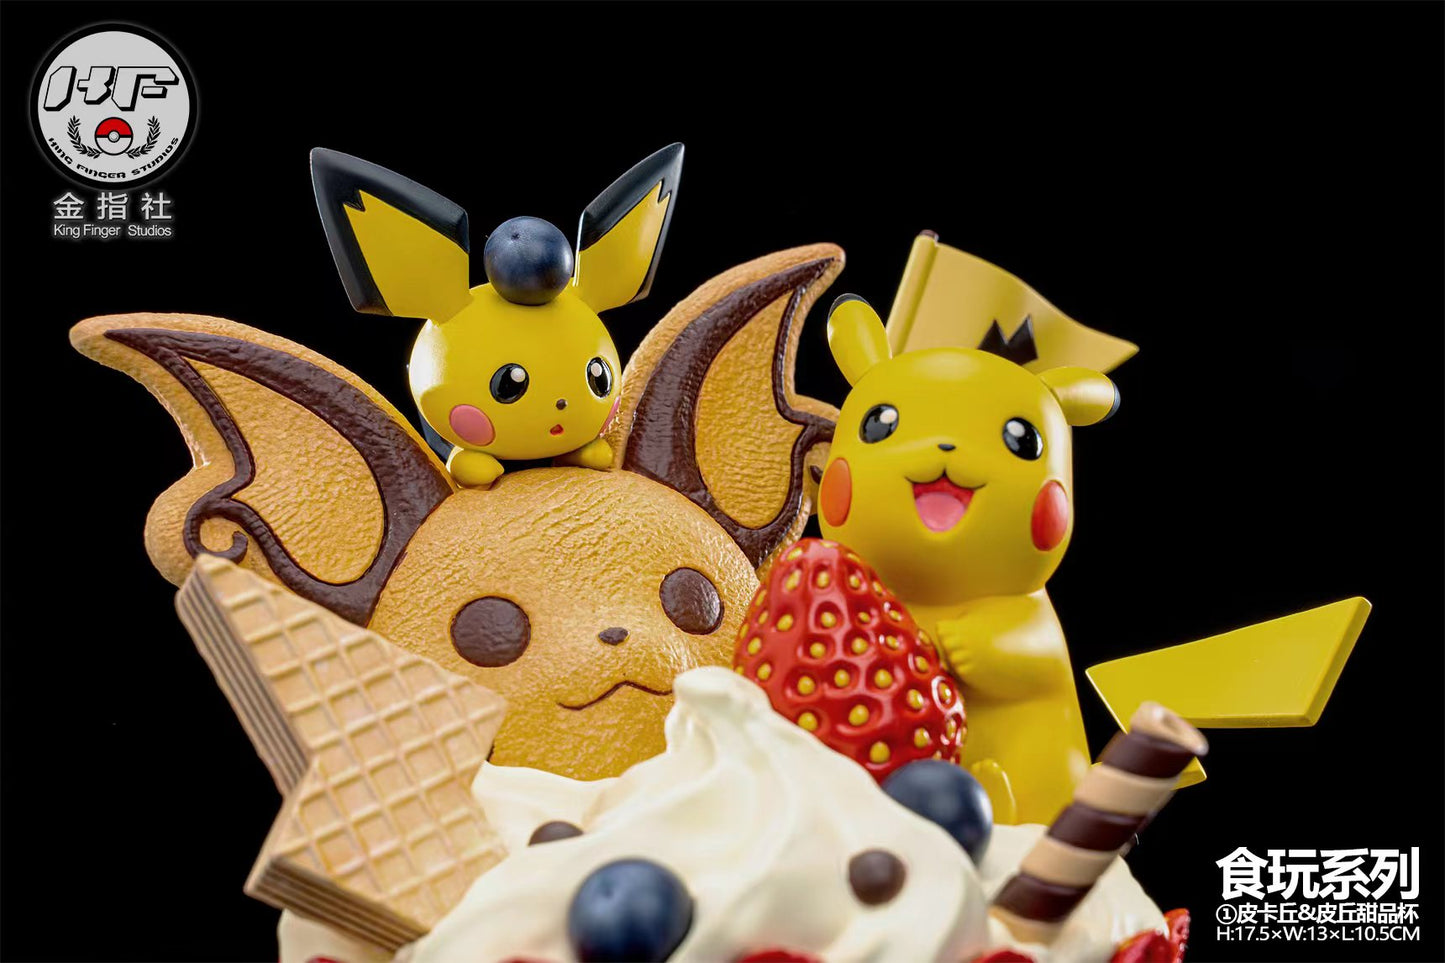 [PREORDER CLOSED] Mini Statue [KING FINGER] - Pikachu & Pichu Dessert